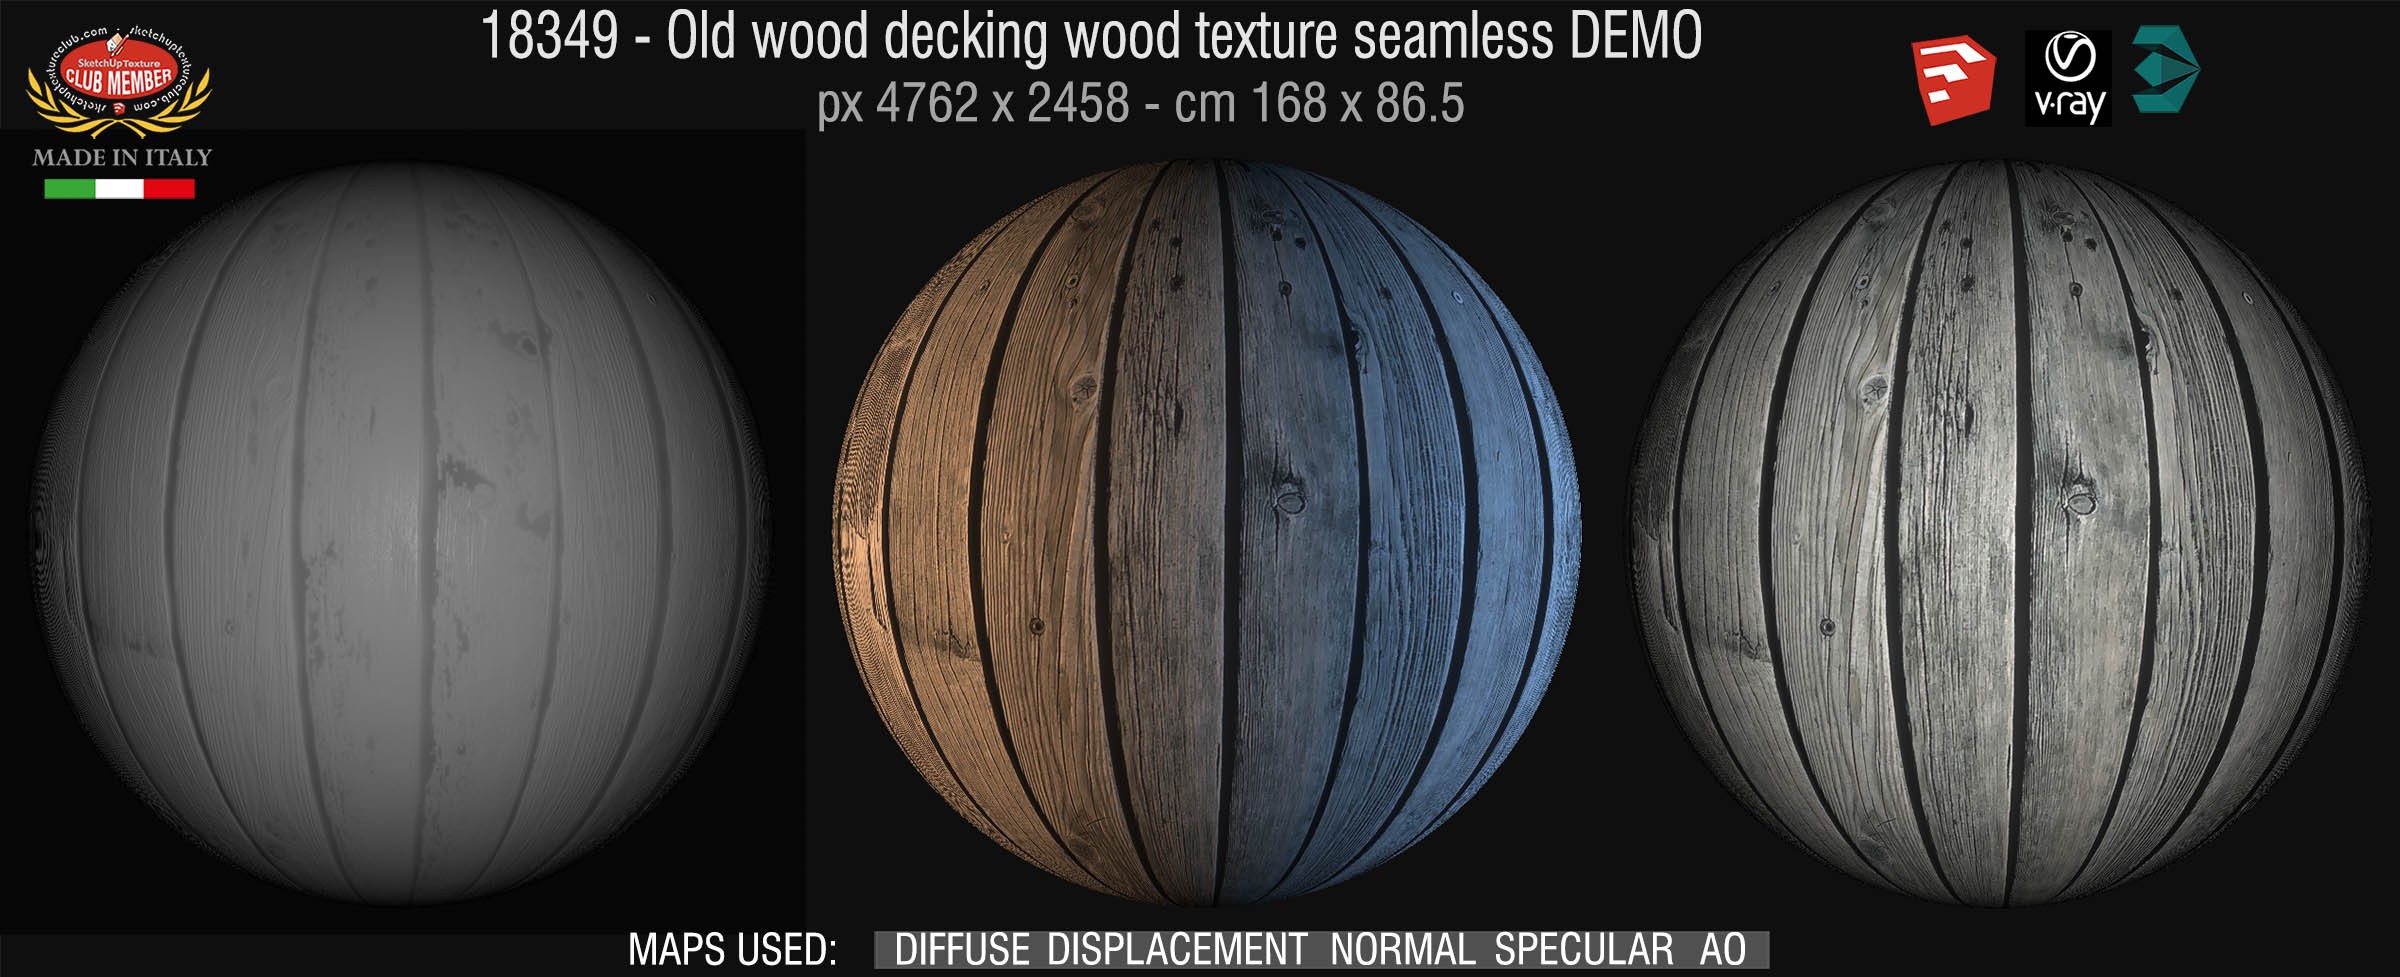 18349 - HR old wood decking texture + maps DEMO